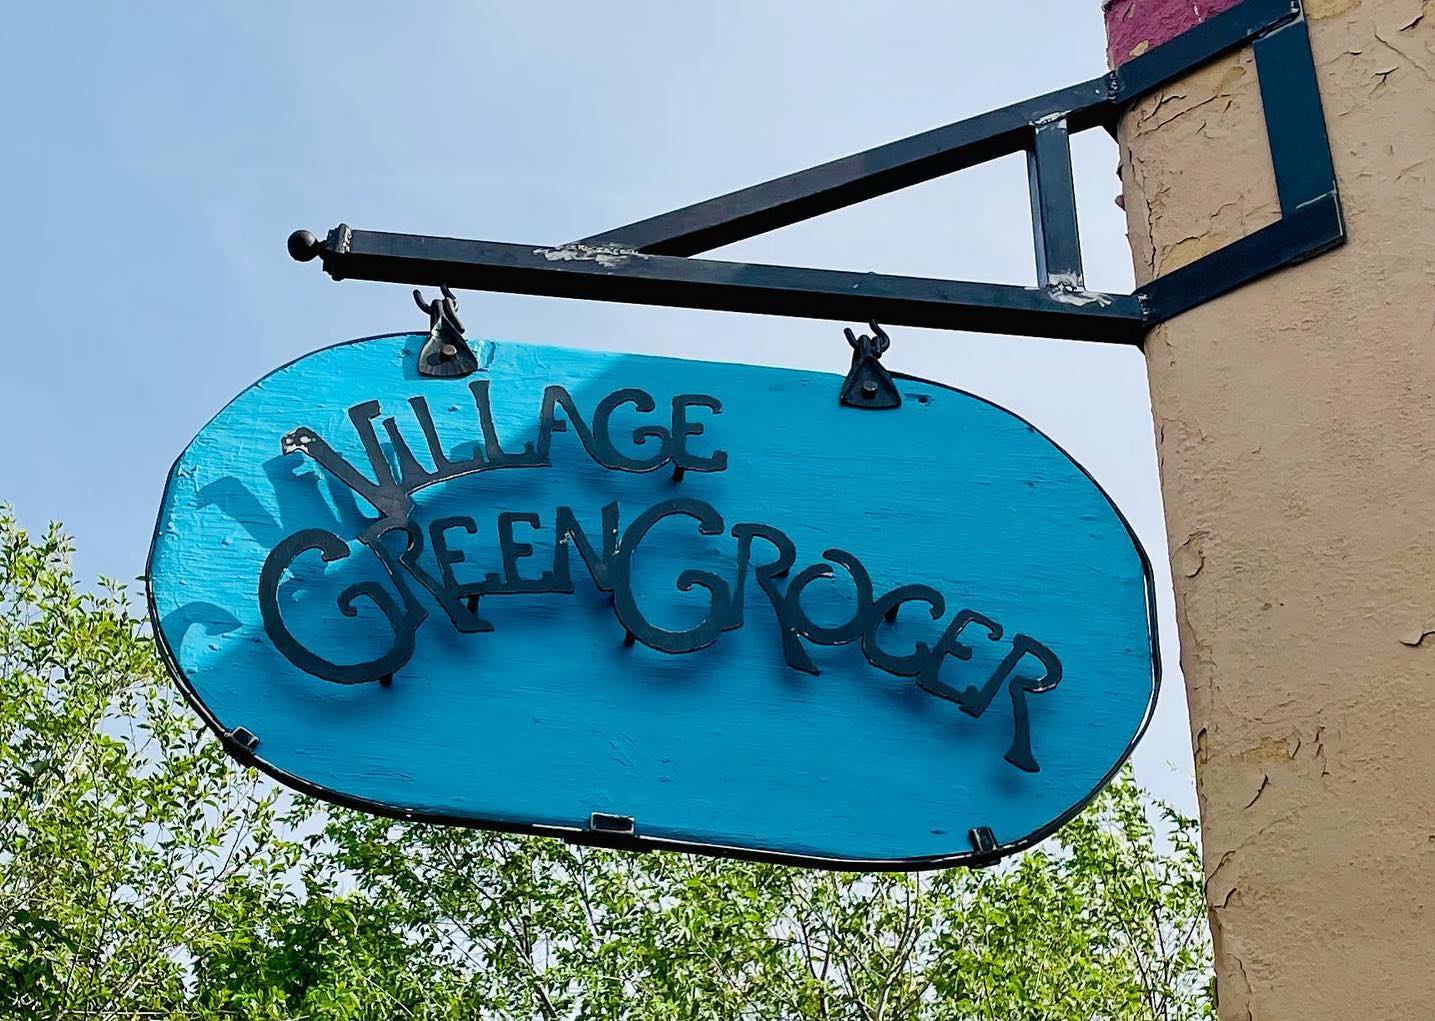 Village Greengrocer